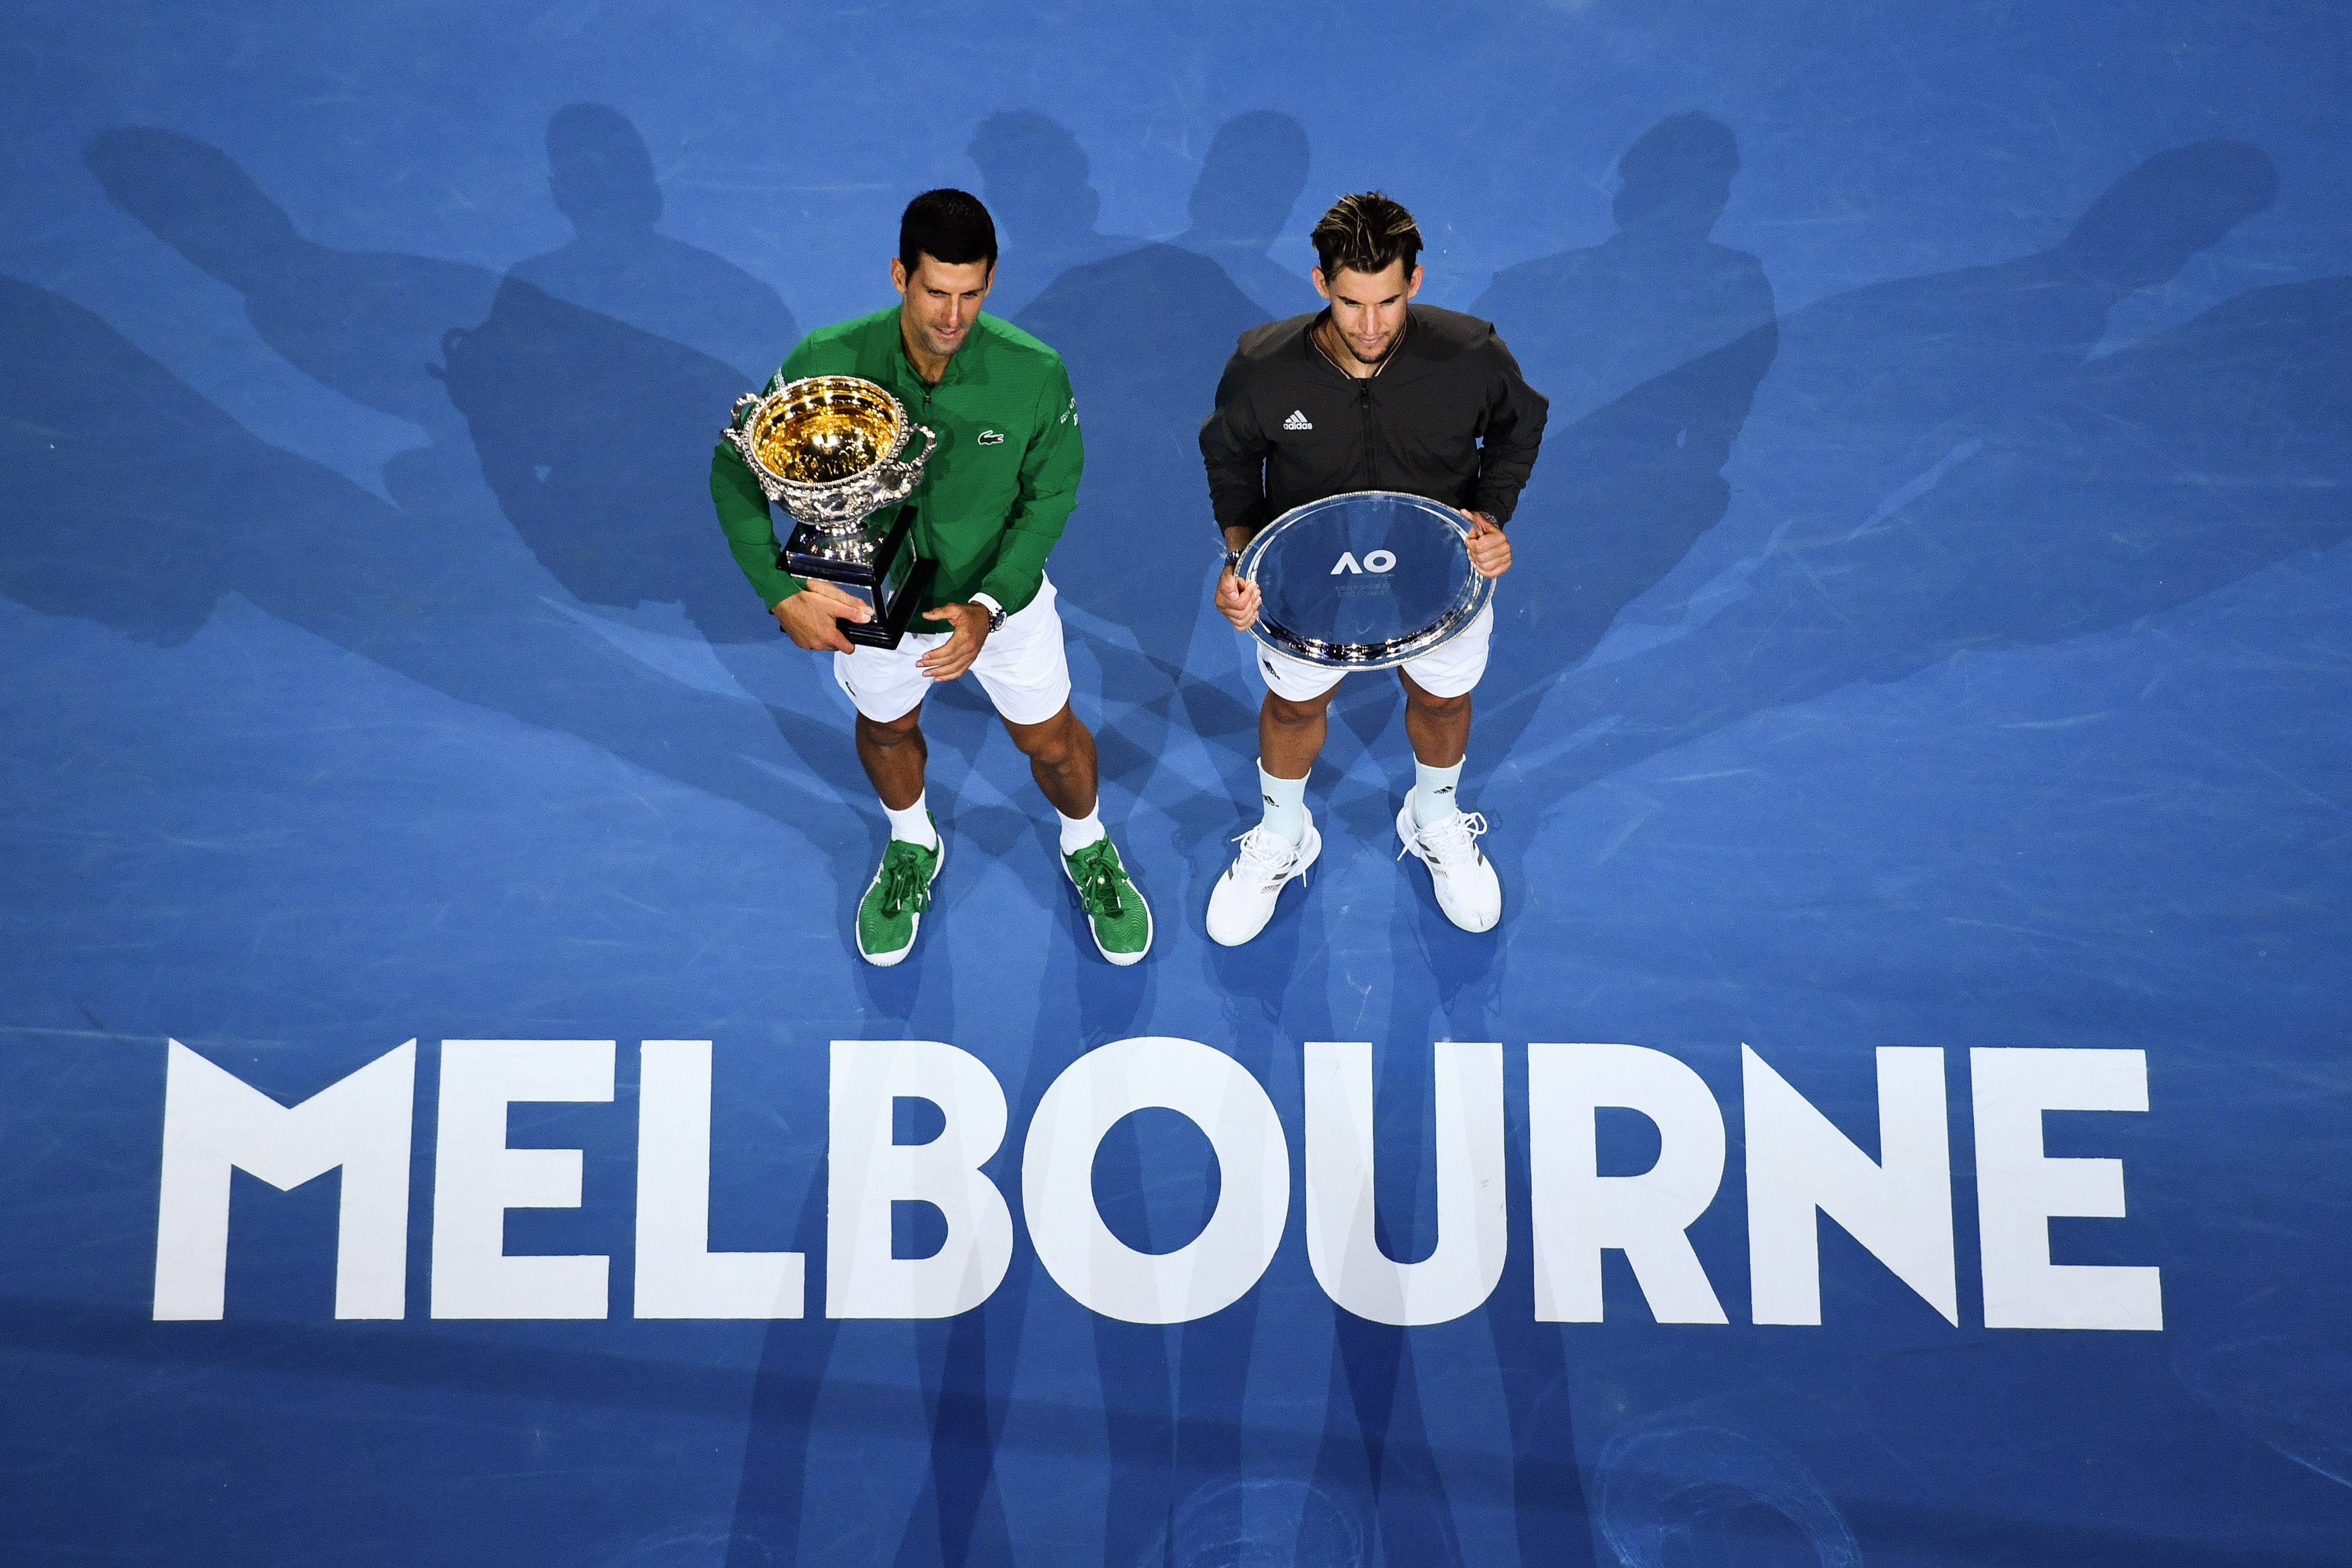 ramme Erobre evne Australian Open 2021: ATP confirms a February 8 start - China.org.cn